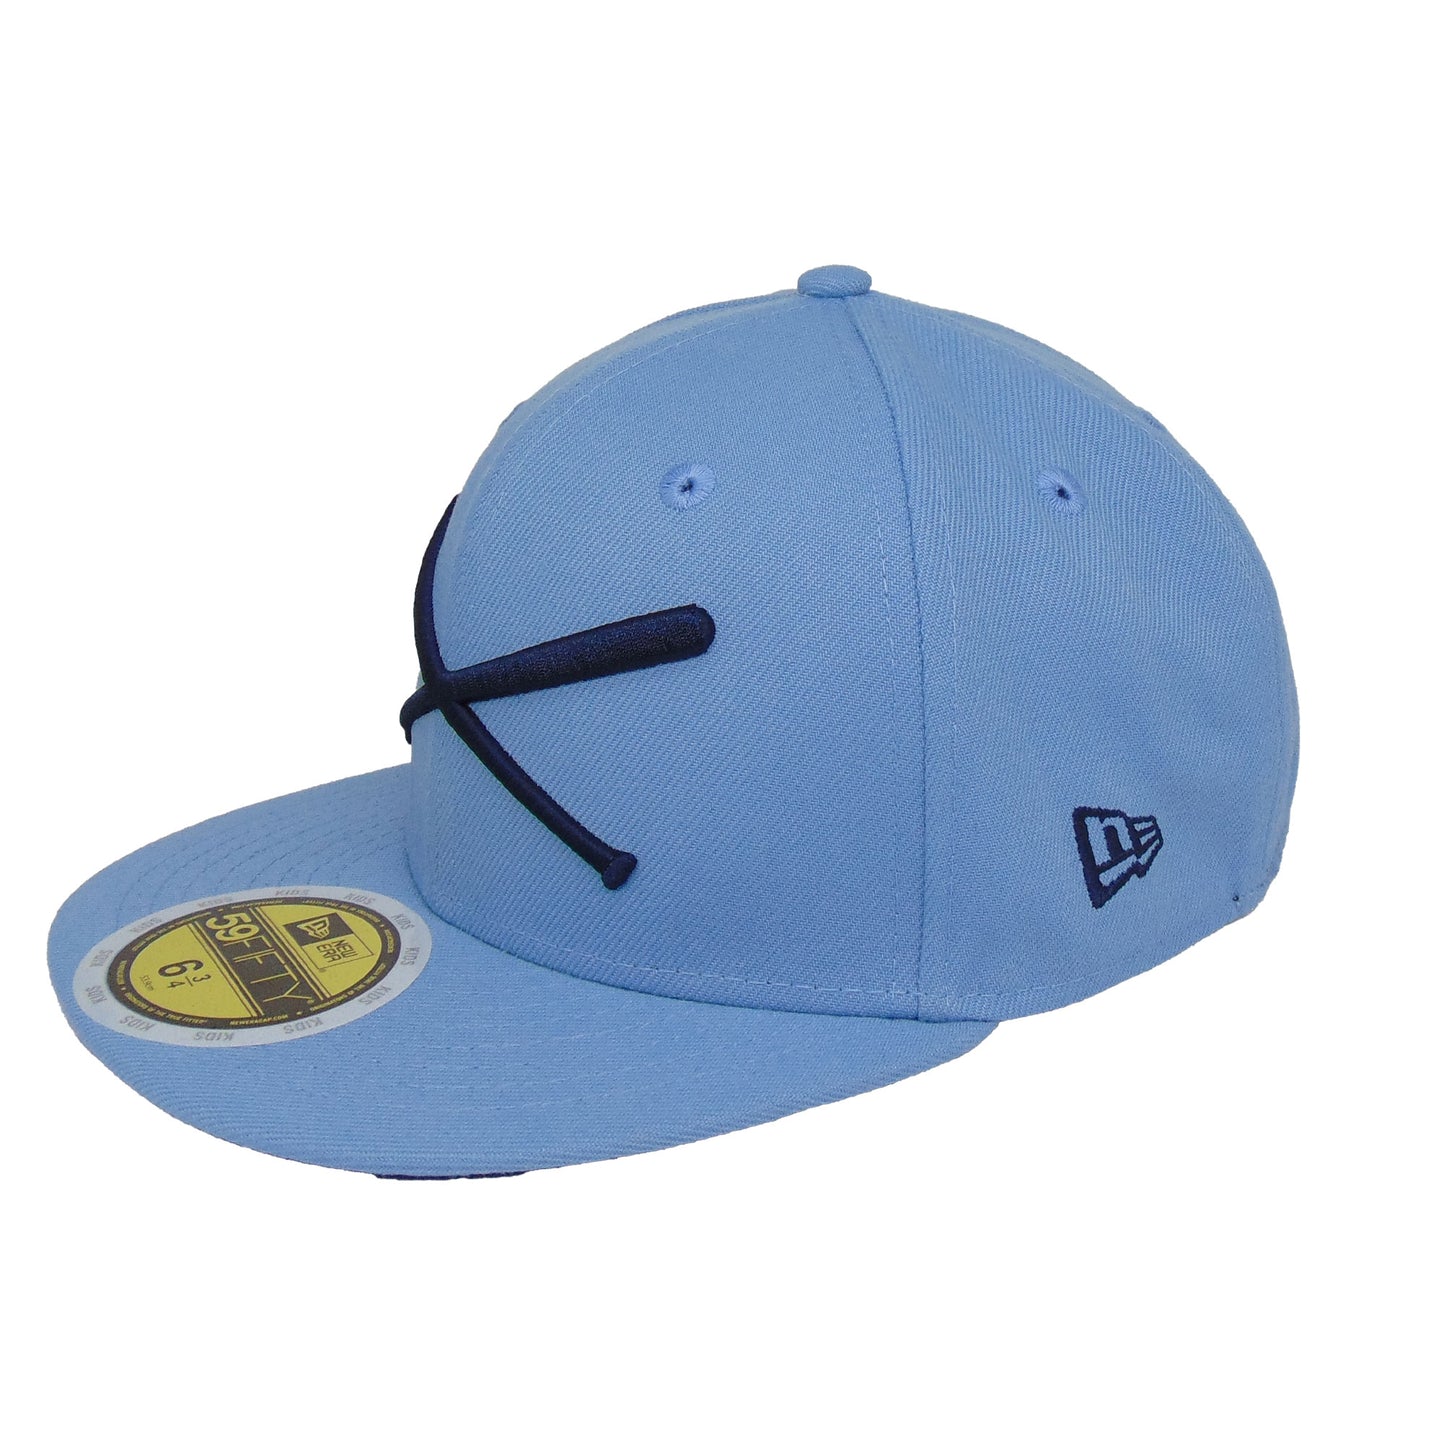 KIDS JustFitteds Crossed Bats Logo New Era 59FIFTY Cap Blue